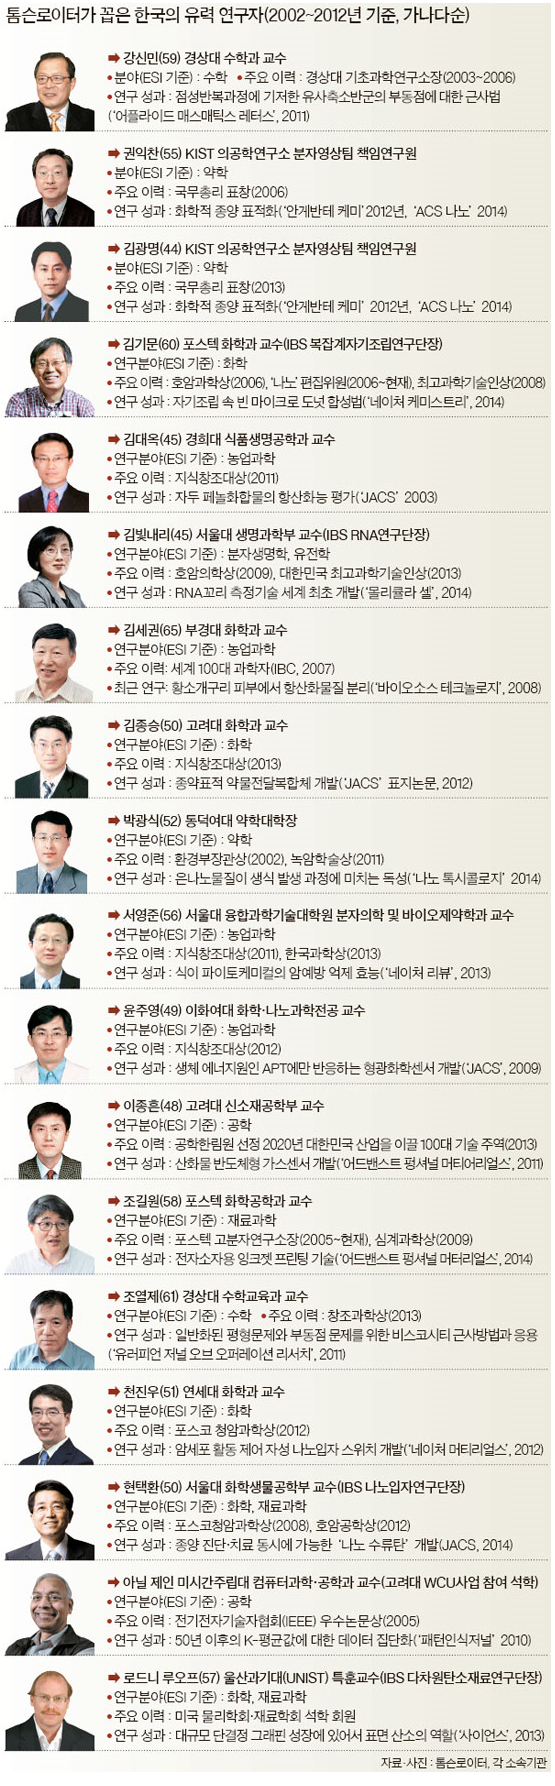 [Korean Media] Thomson Reuters / Expected Nobelist in Korea 사진